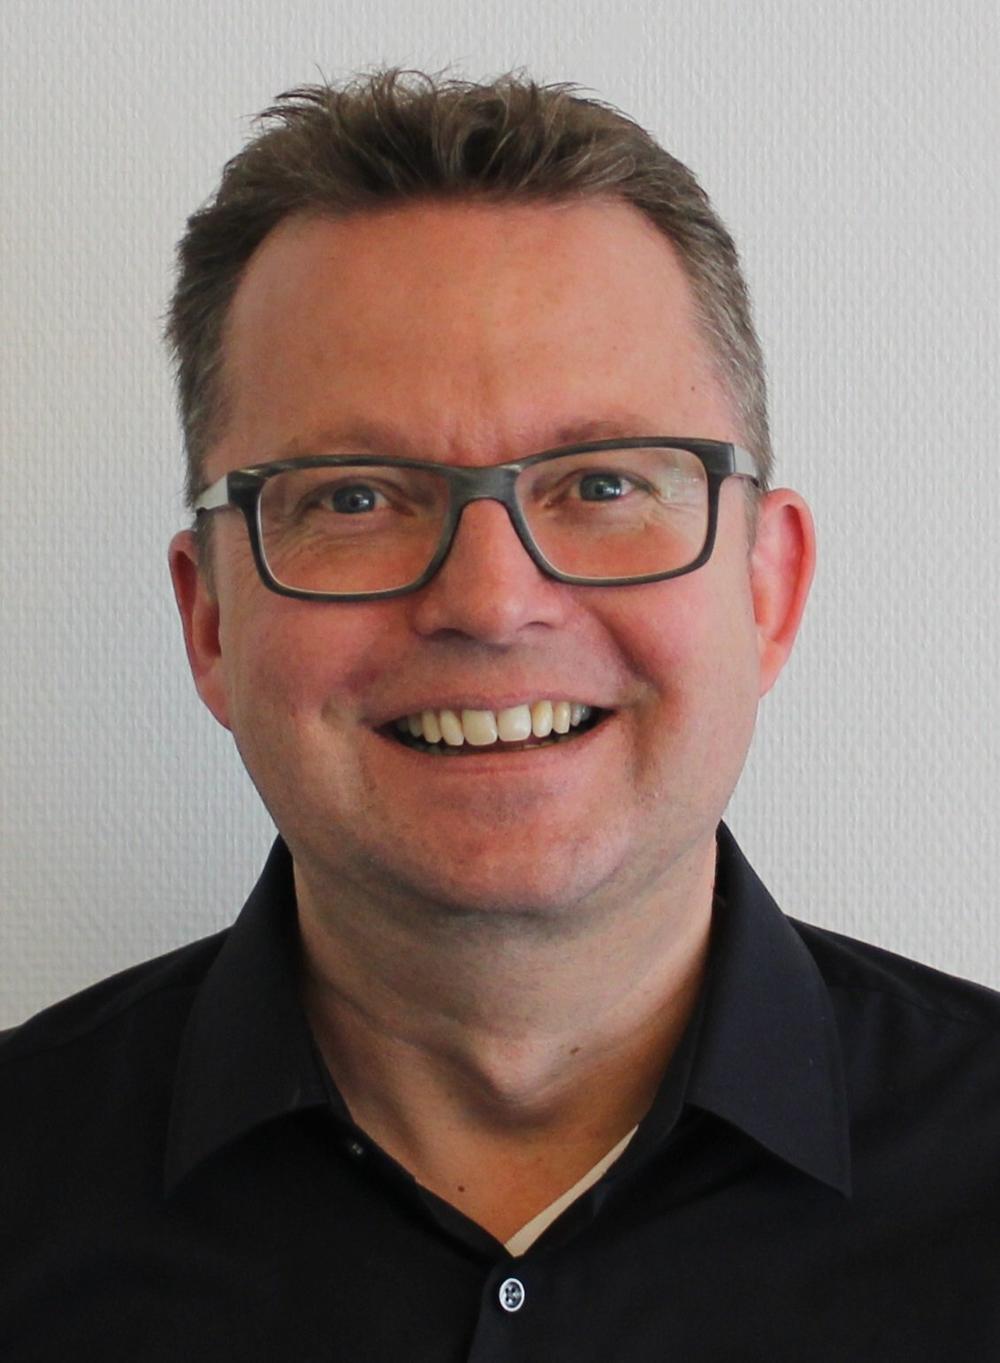 René Skau Björnsson er nu tidligere direktør i Boligkontoret Århus.